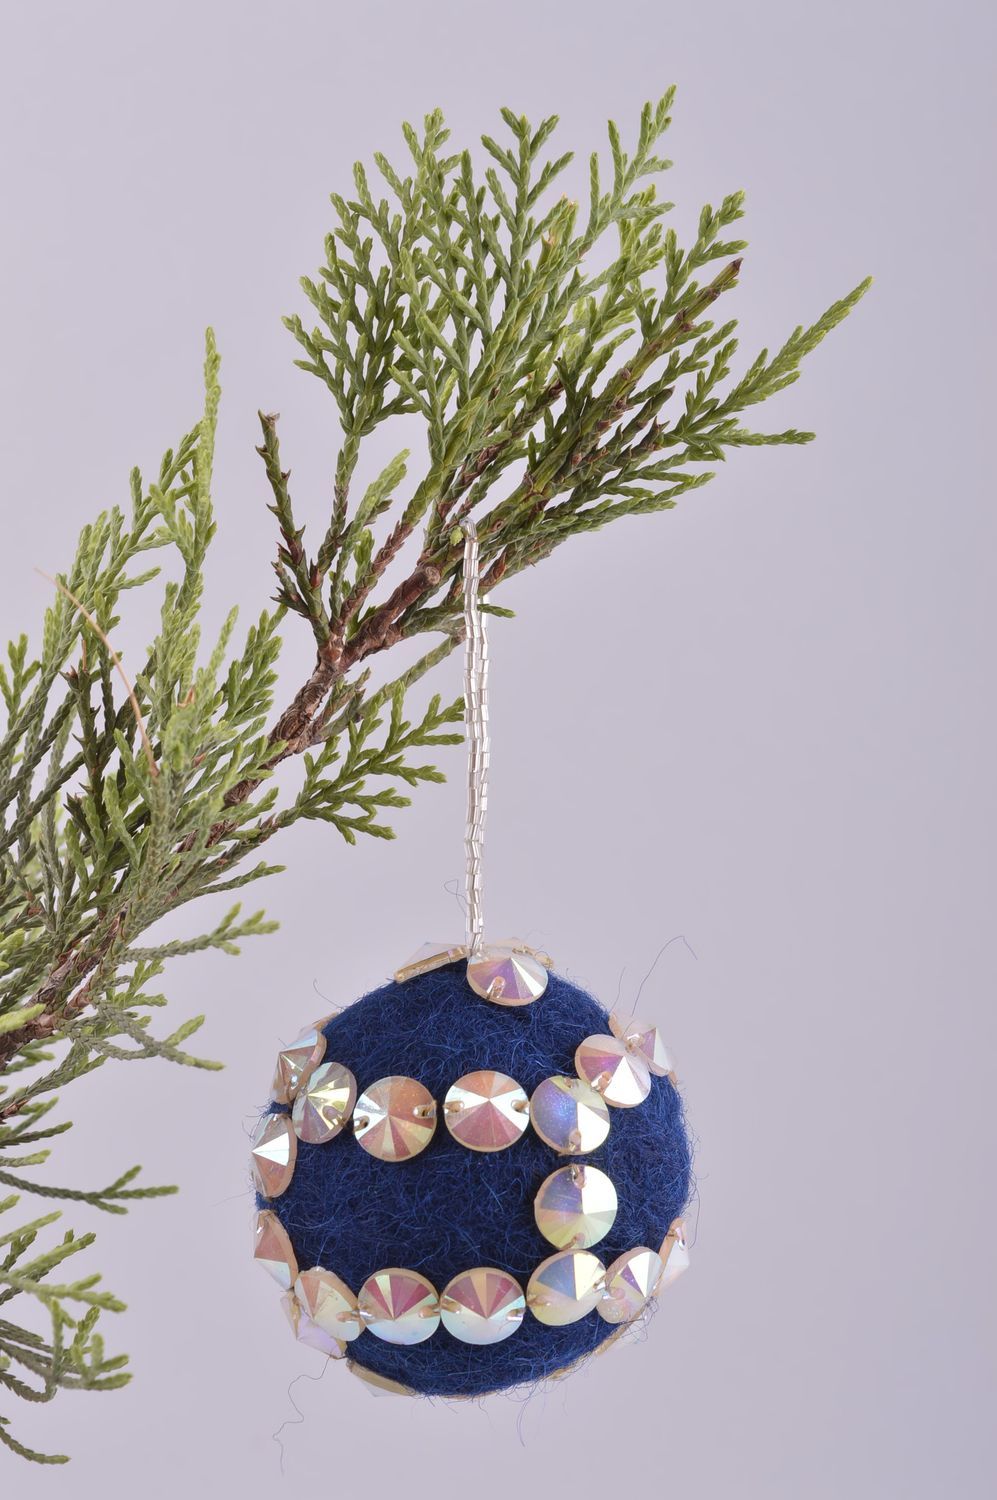 Handmade designer toy Christmas ball Christmas decor ideas decorative use only photo 1